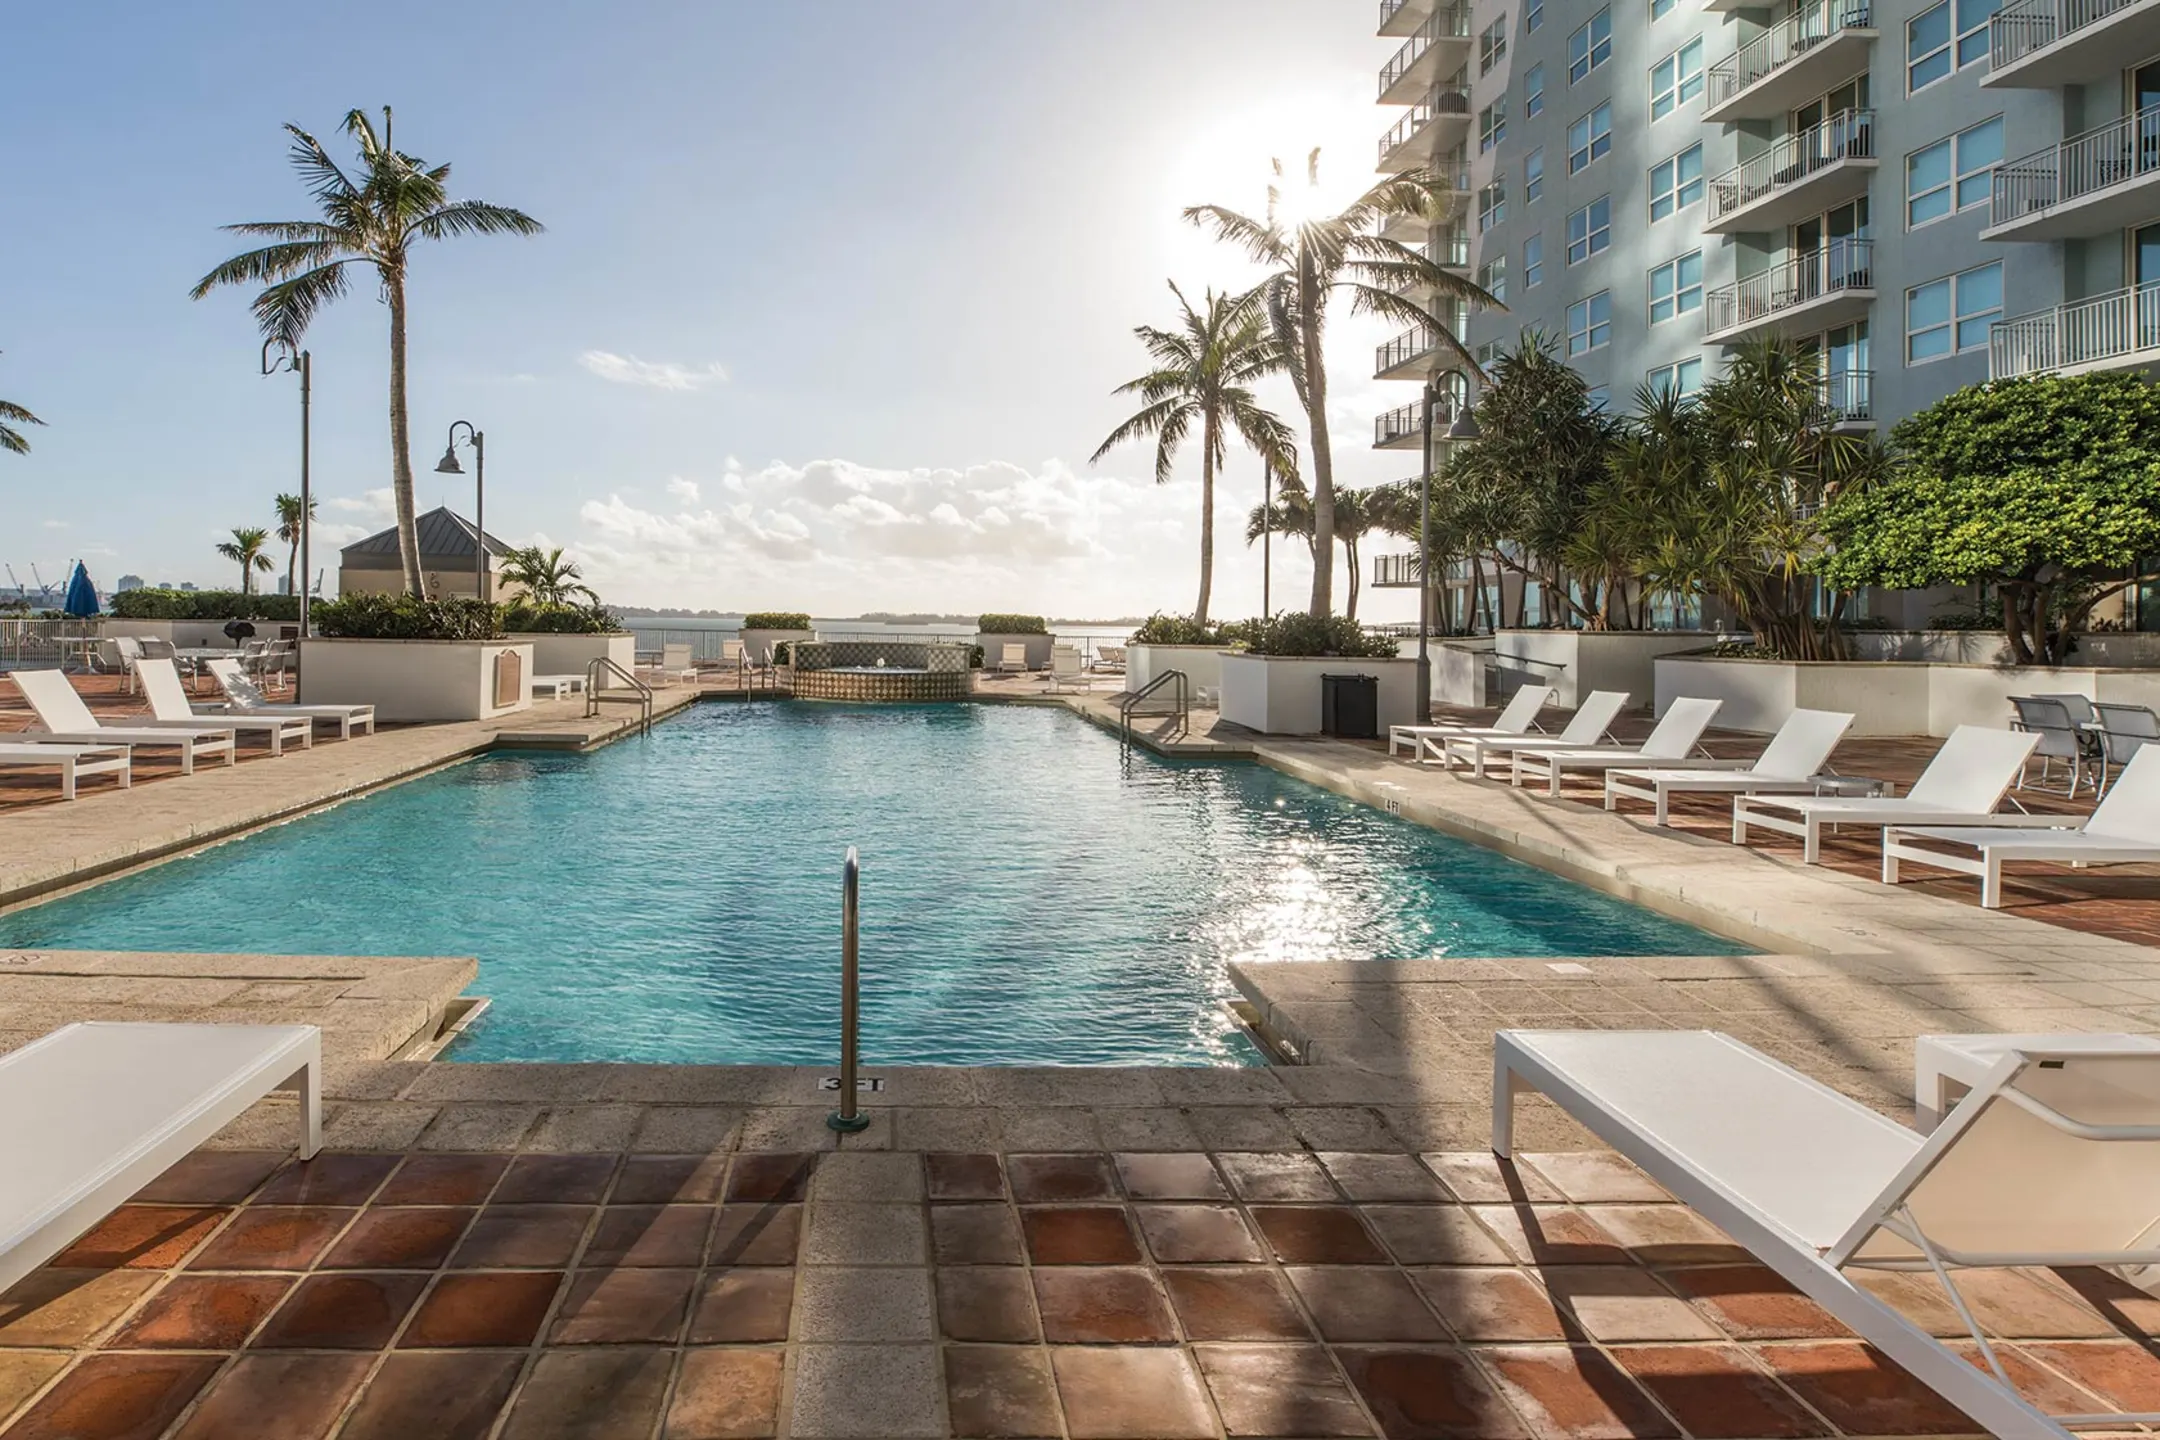 Pool - Yacht Club at Brickell Apartments - Miami, FL